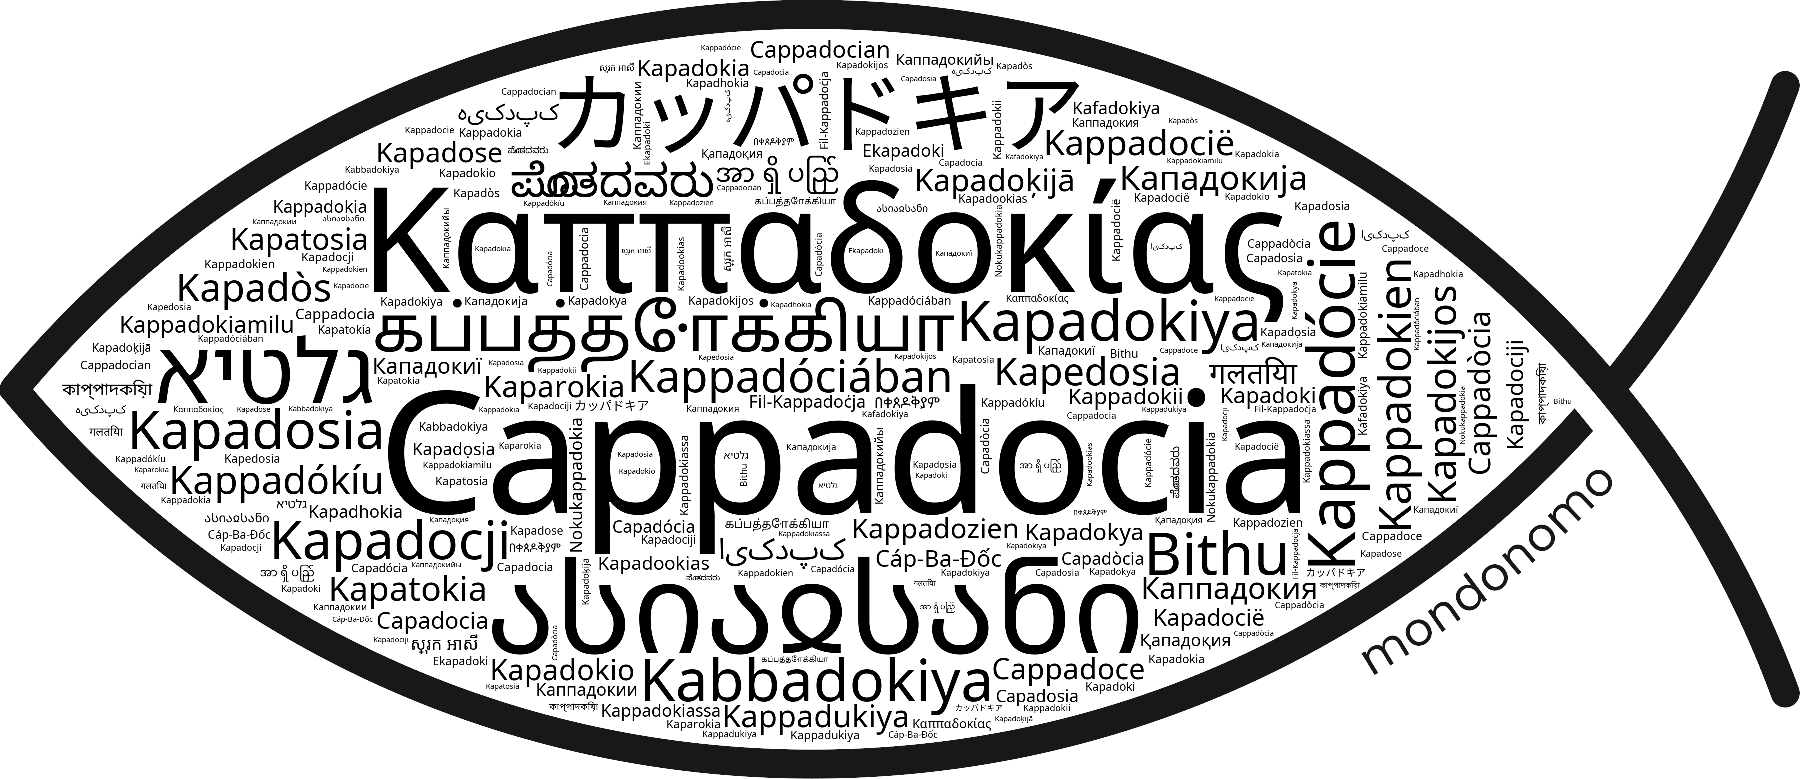 Name Cappadocia in the world's Bibles